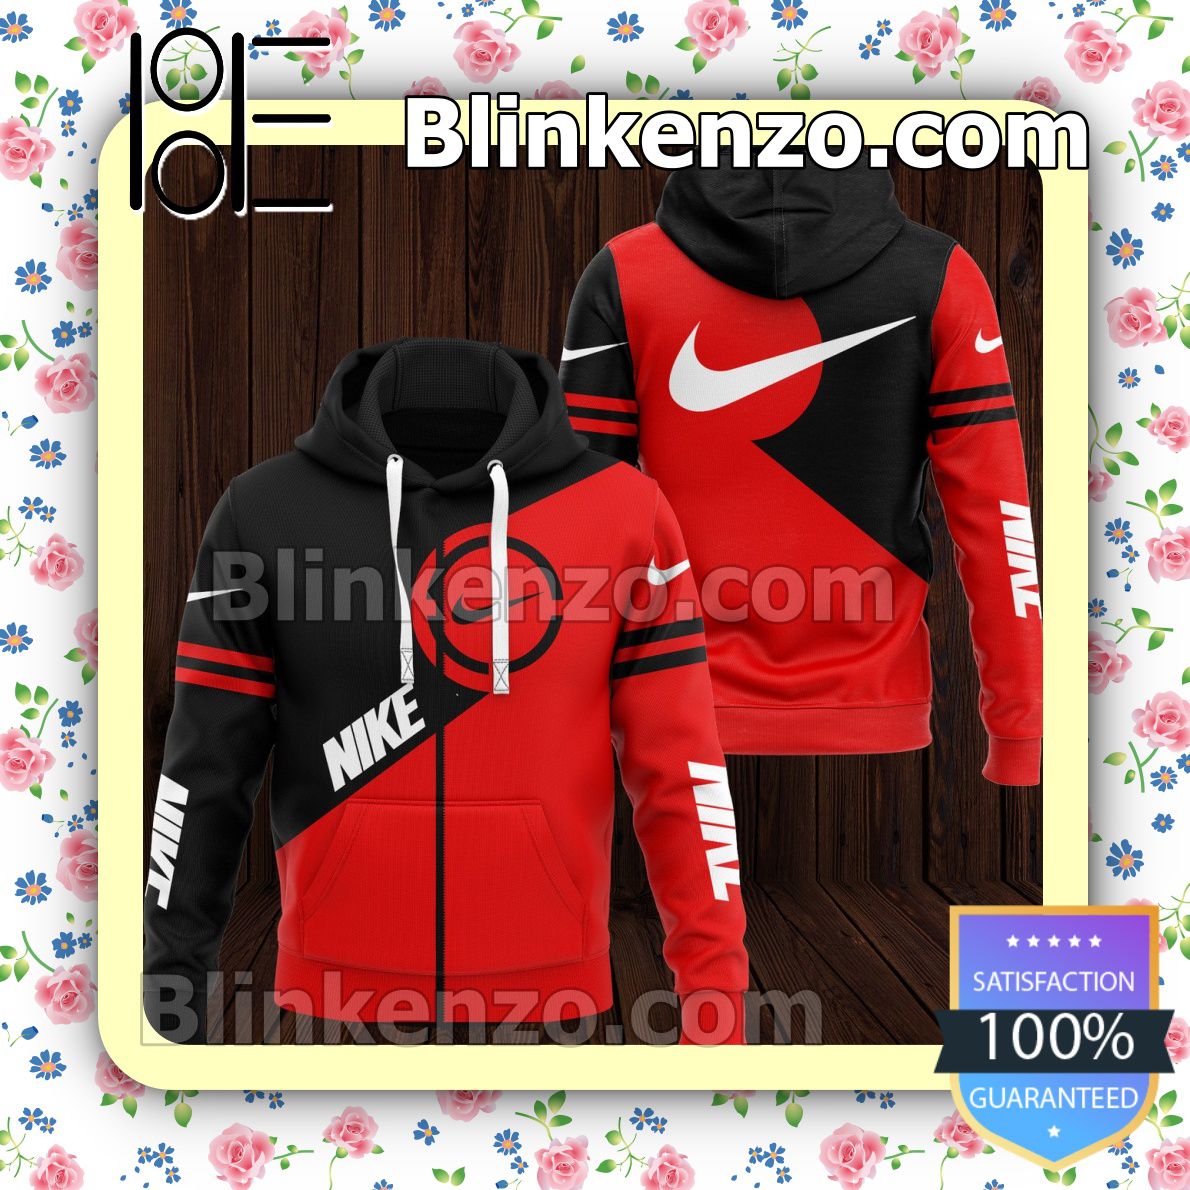 Print On Demand Nike Black And Red Full-Zip Hooded Fleece Sweatshirt